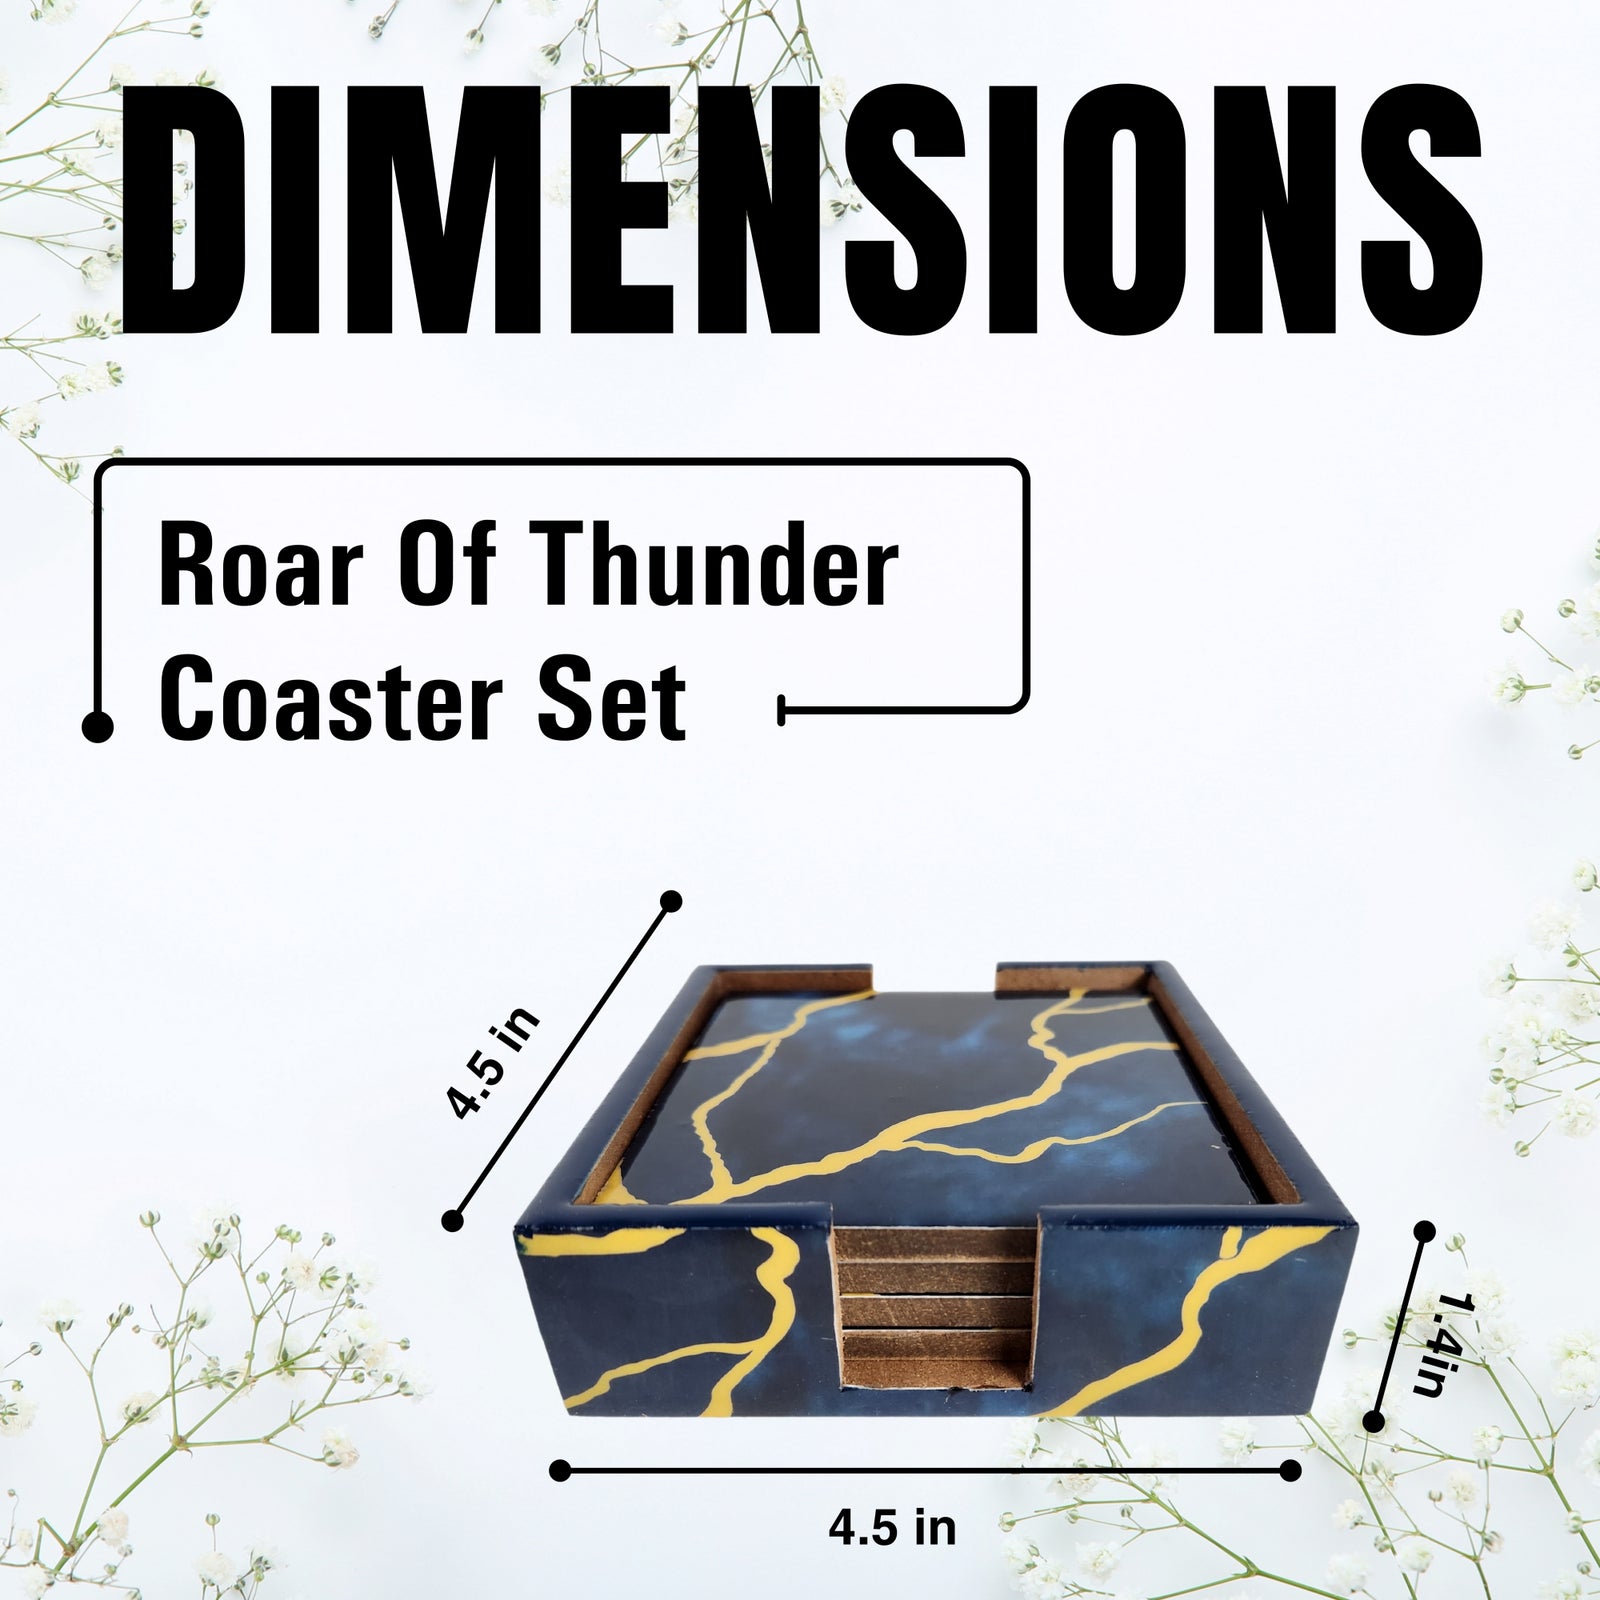 Roar Of Thunder Coaster Set